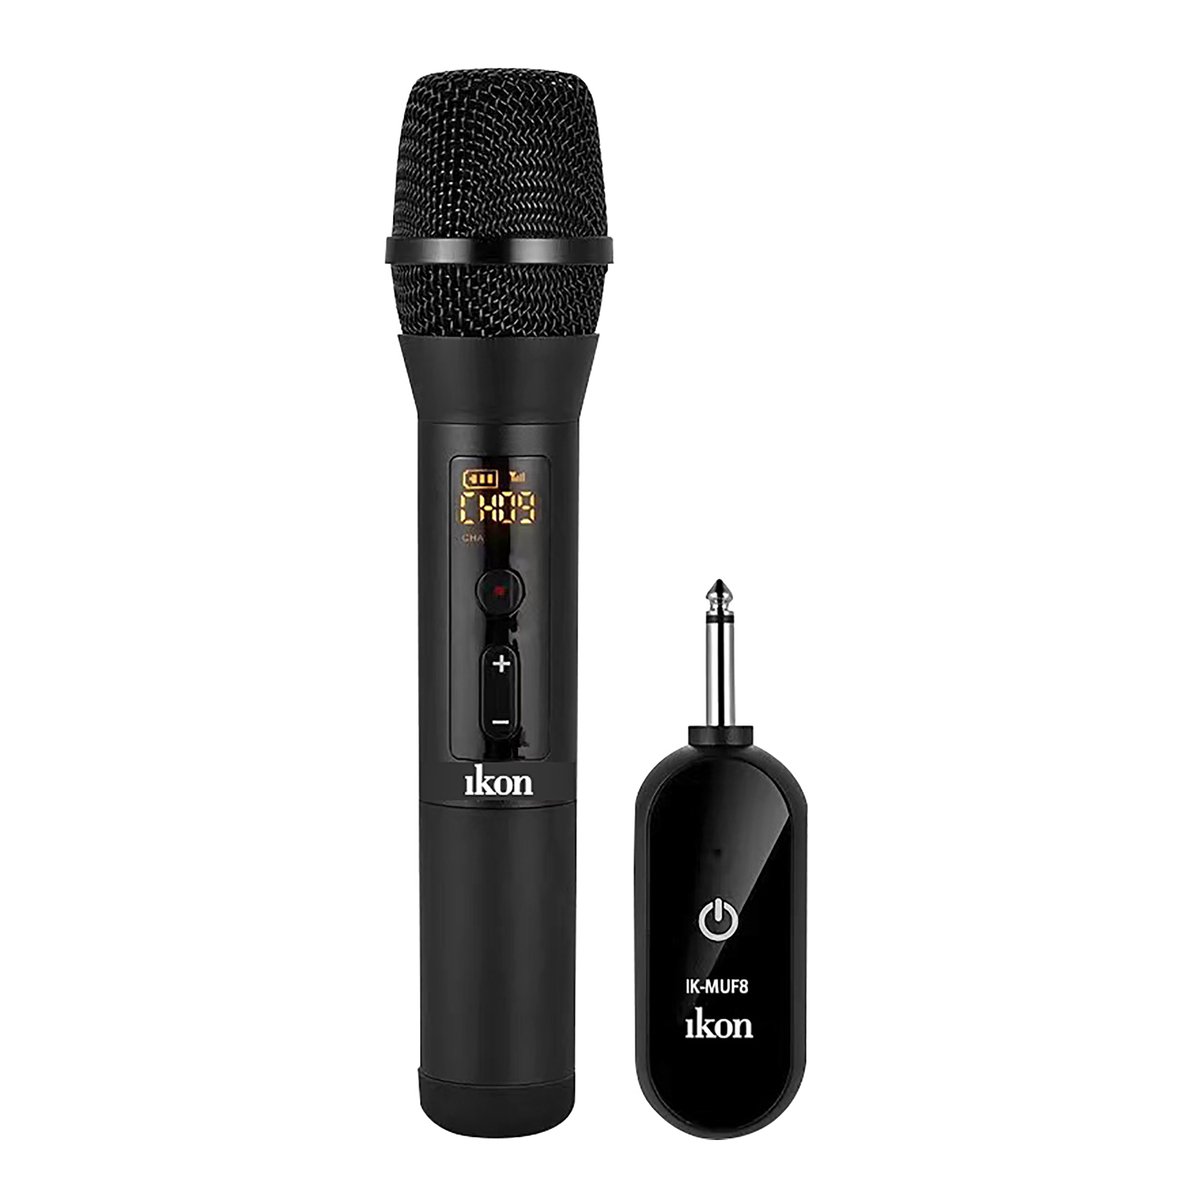 Ikon FM Wireless Microphone IK-MUF8